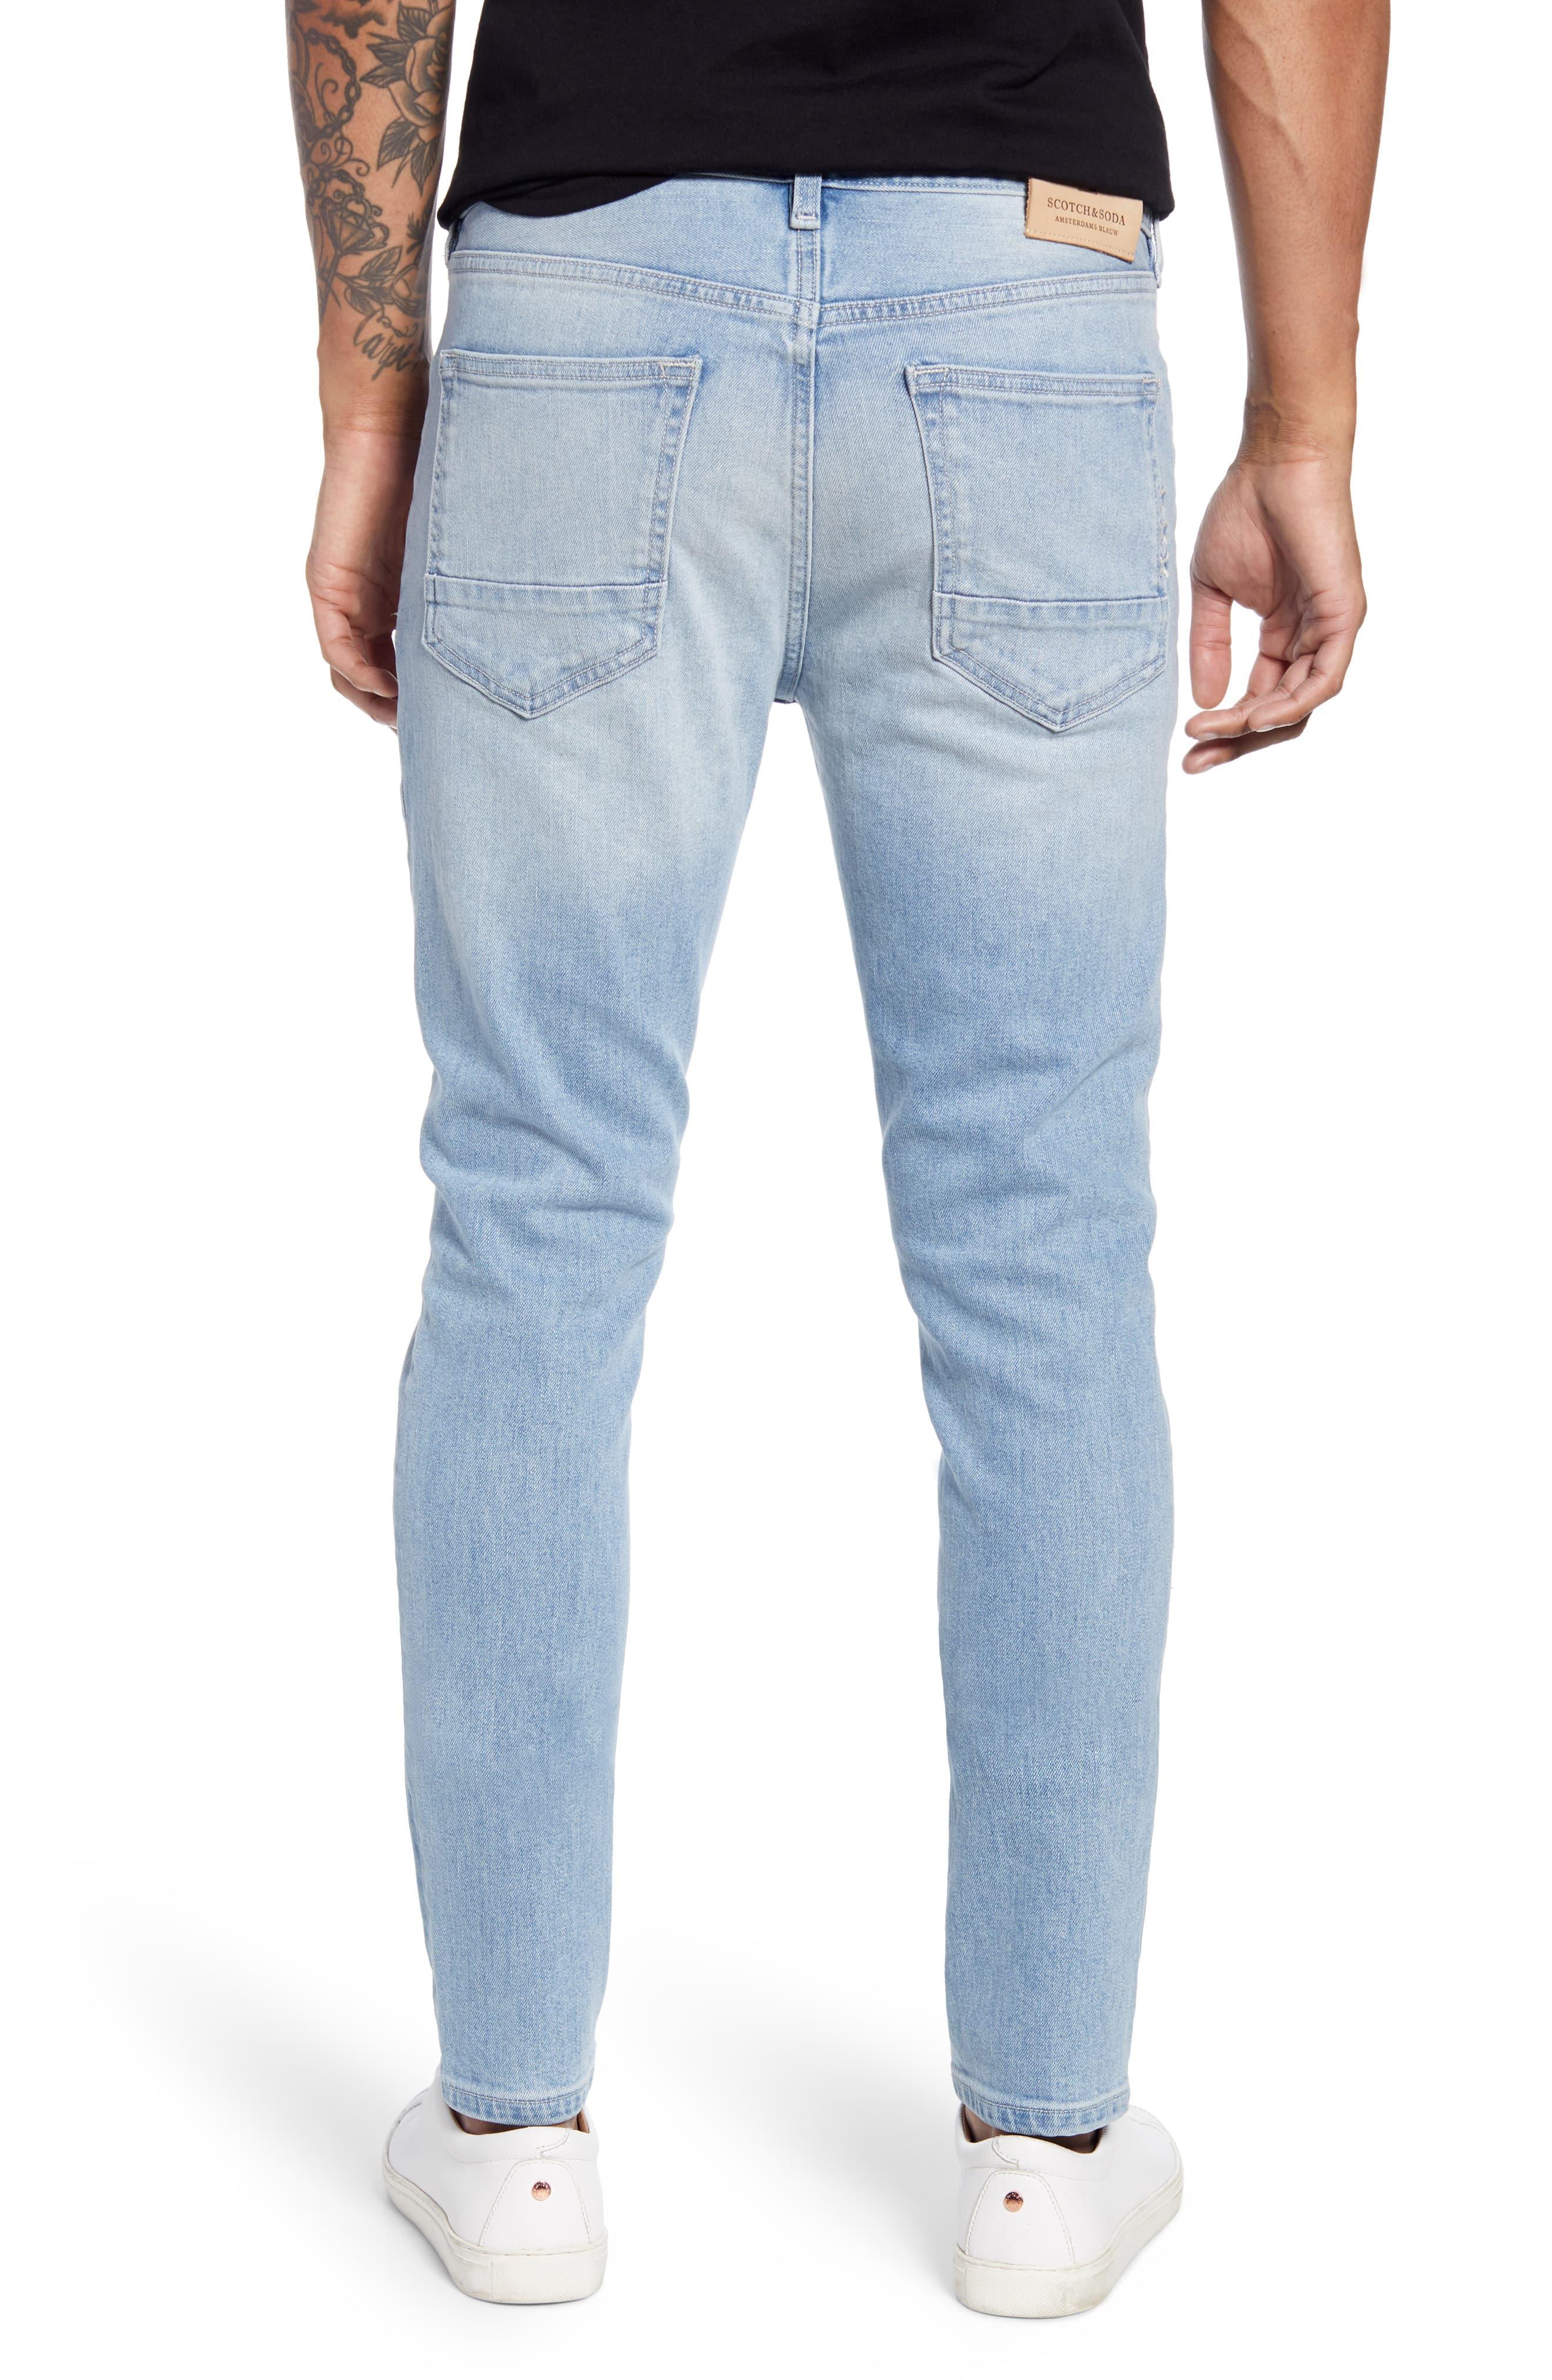 Scotch & Soda Skim Slim Fit Jeans in Blue for Men - Lyst